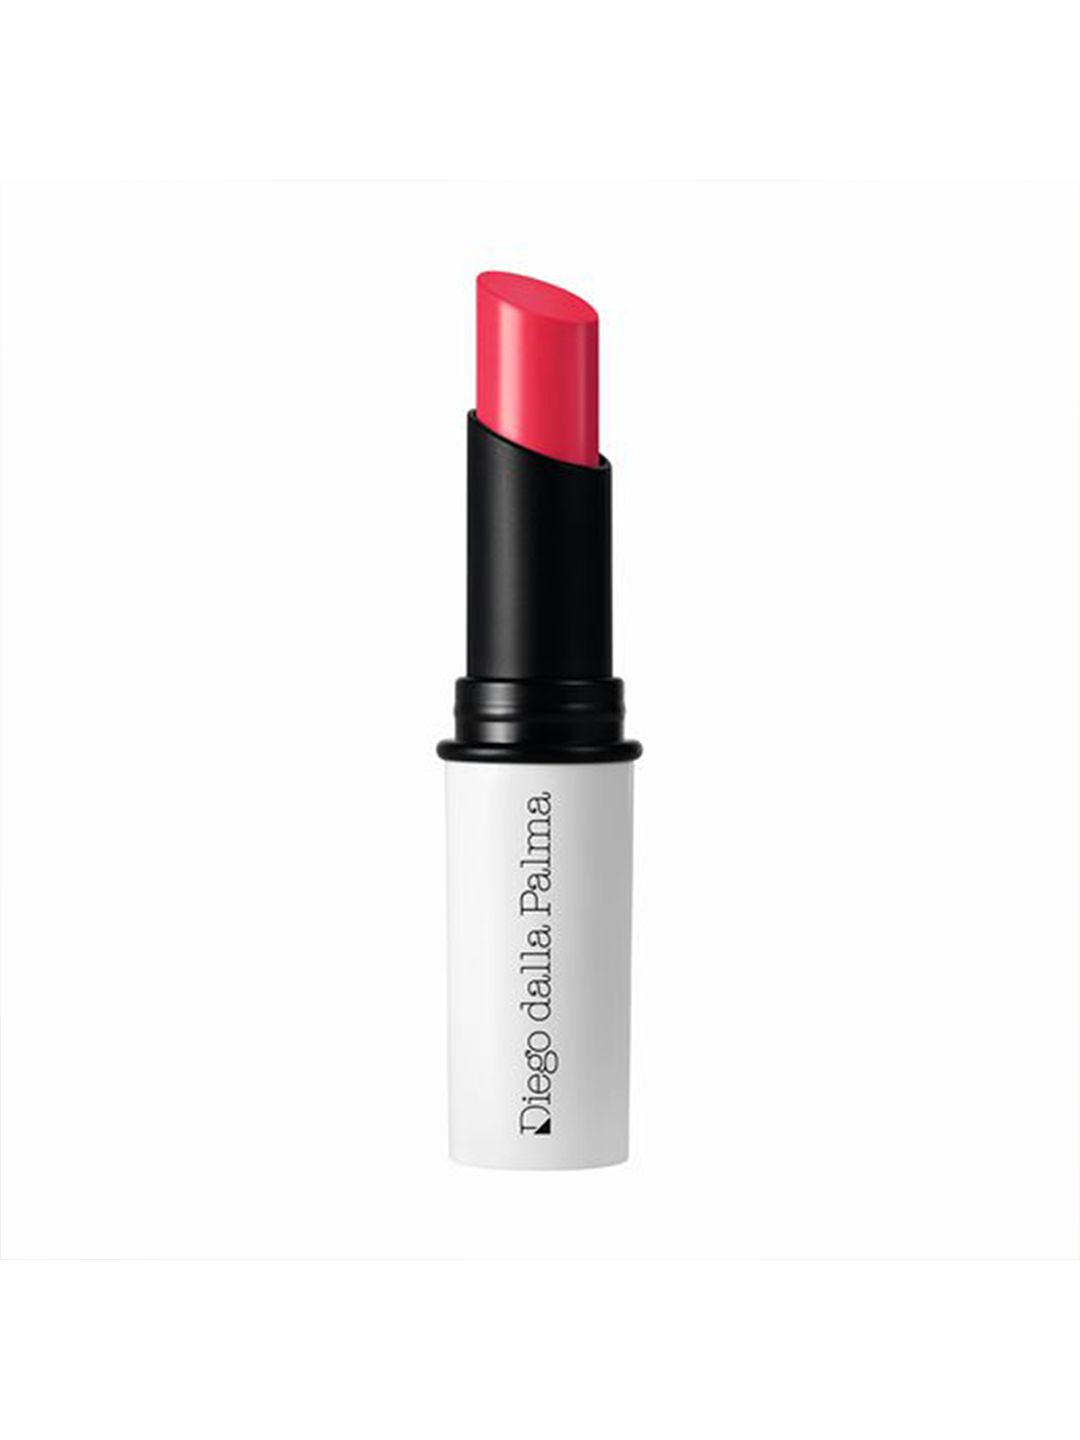 Diego dalla Palma MILANO Semitransparent Shiny Lipstick 2.5 ml - Deep Pink Price in India